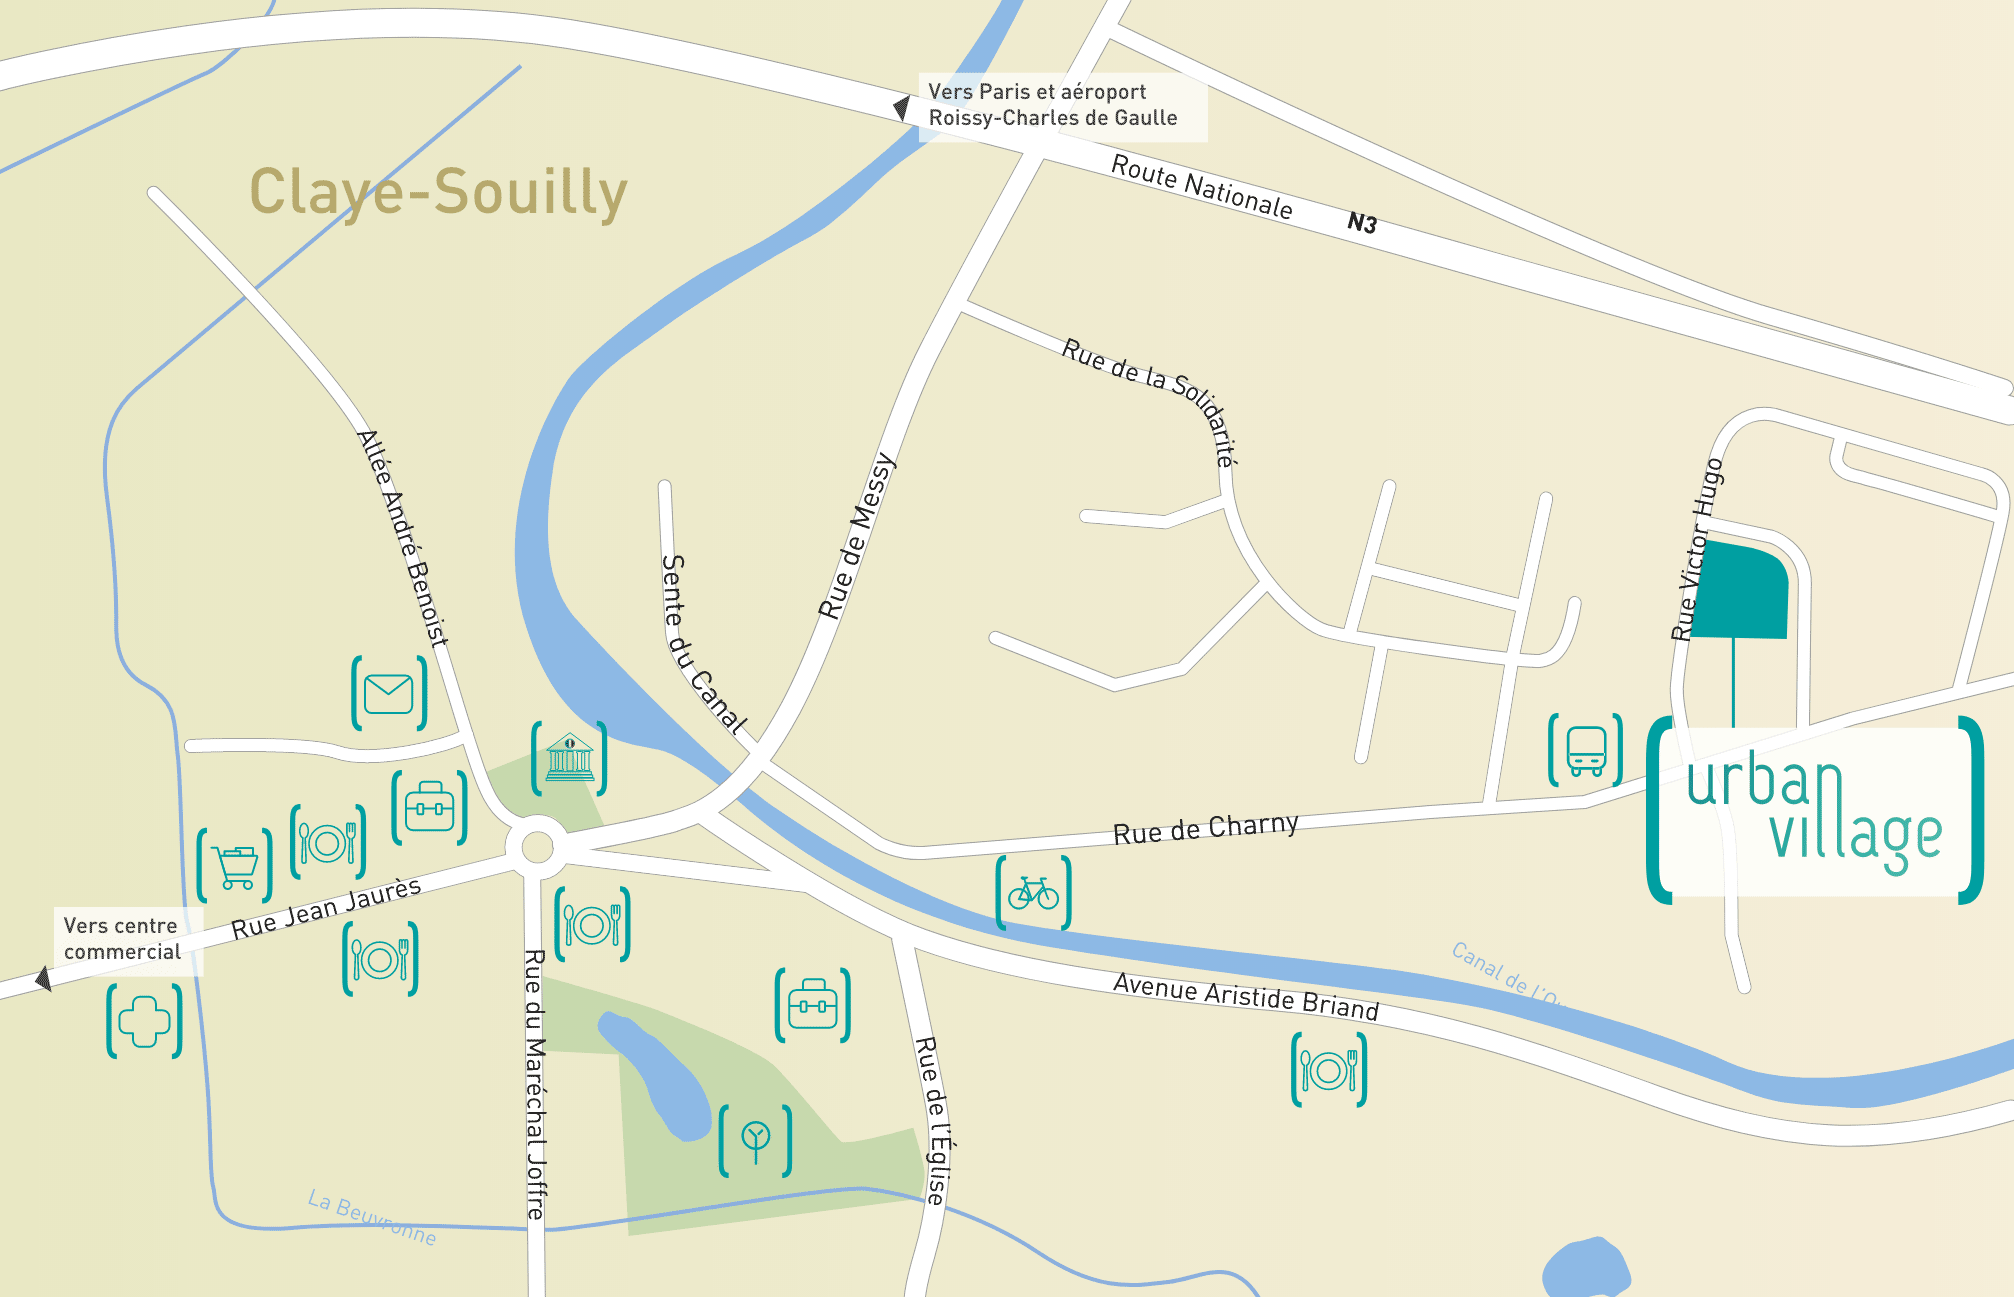 Location de la résidence - Plan